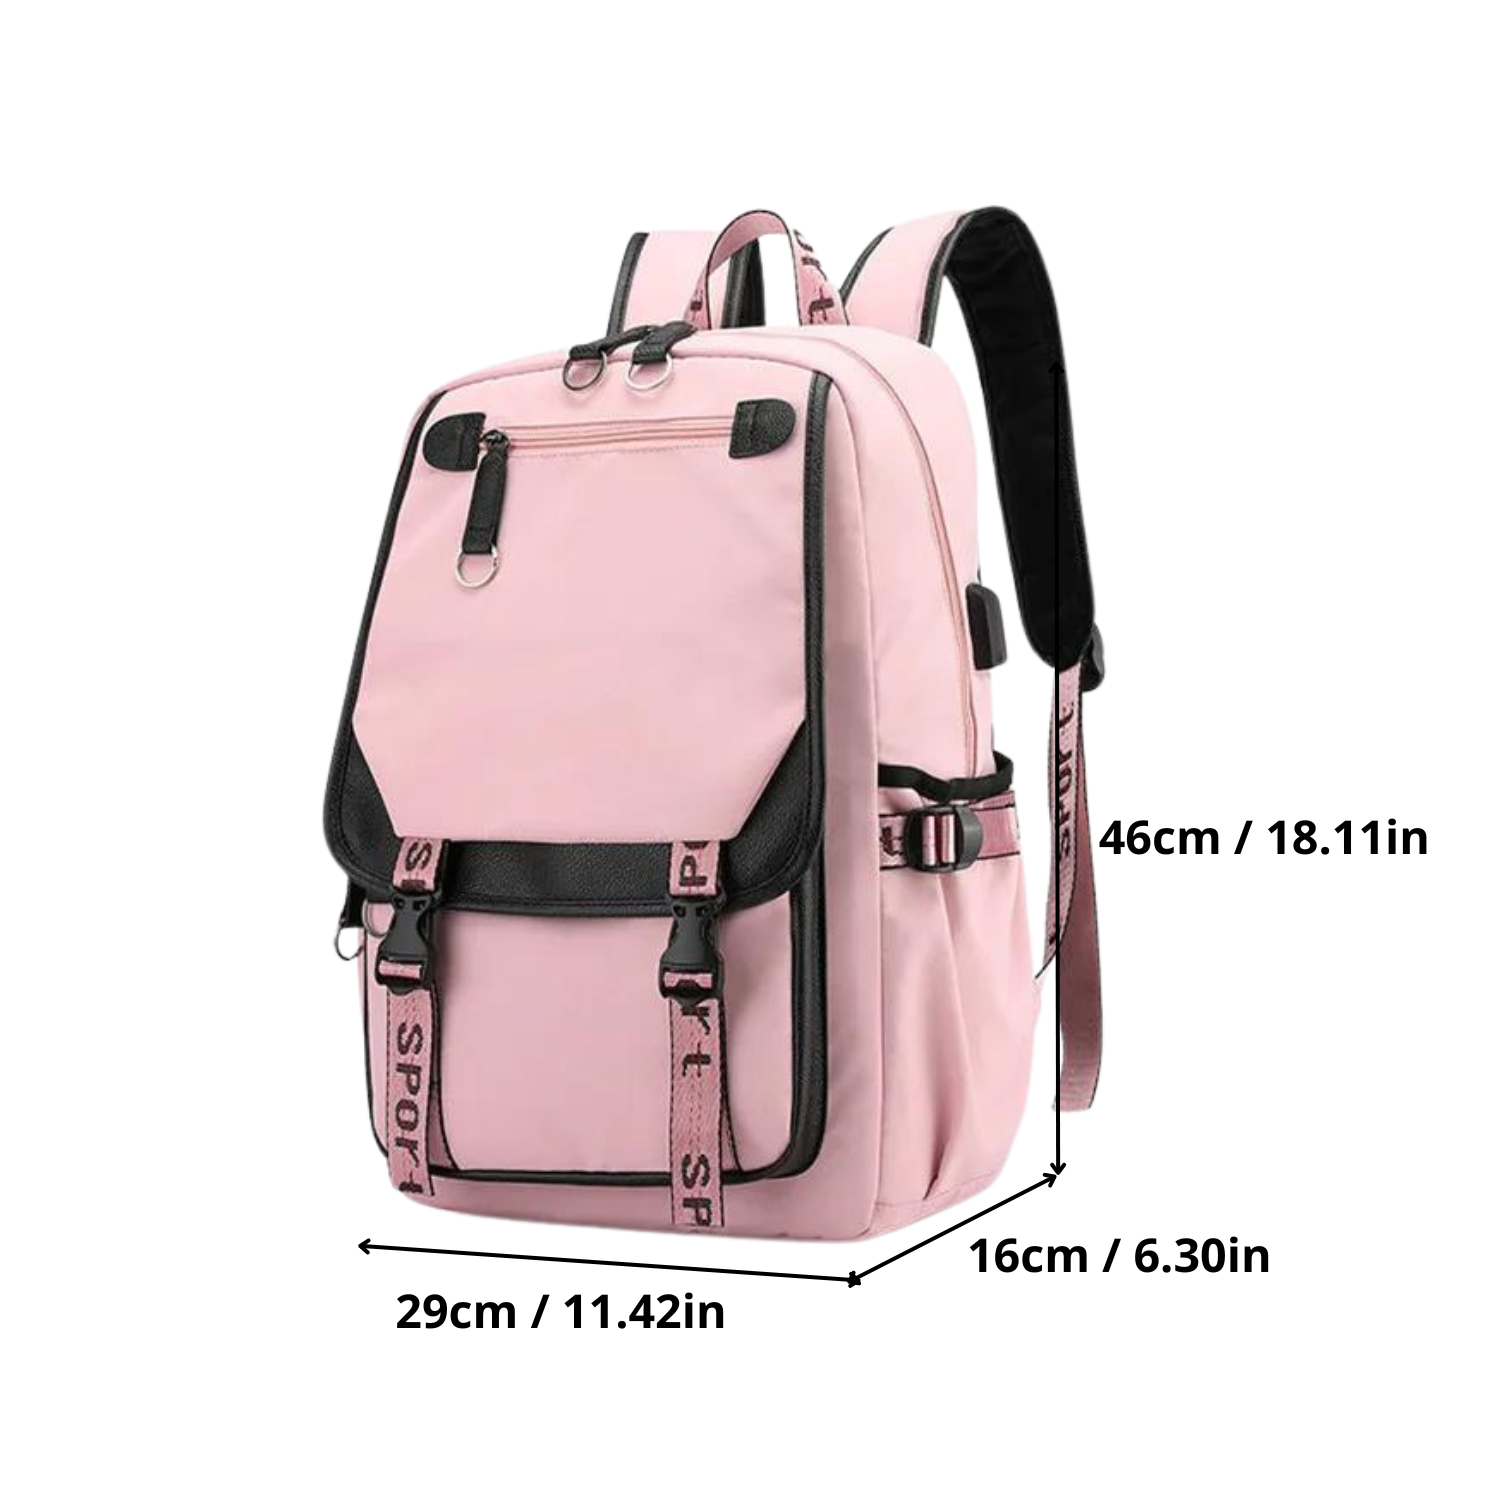 Trendy Teen School Backpack with USB Port